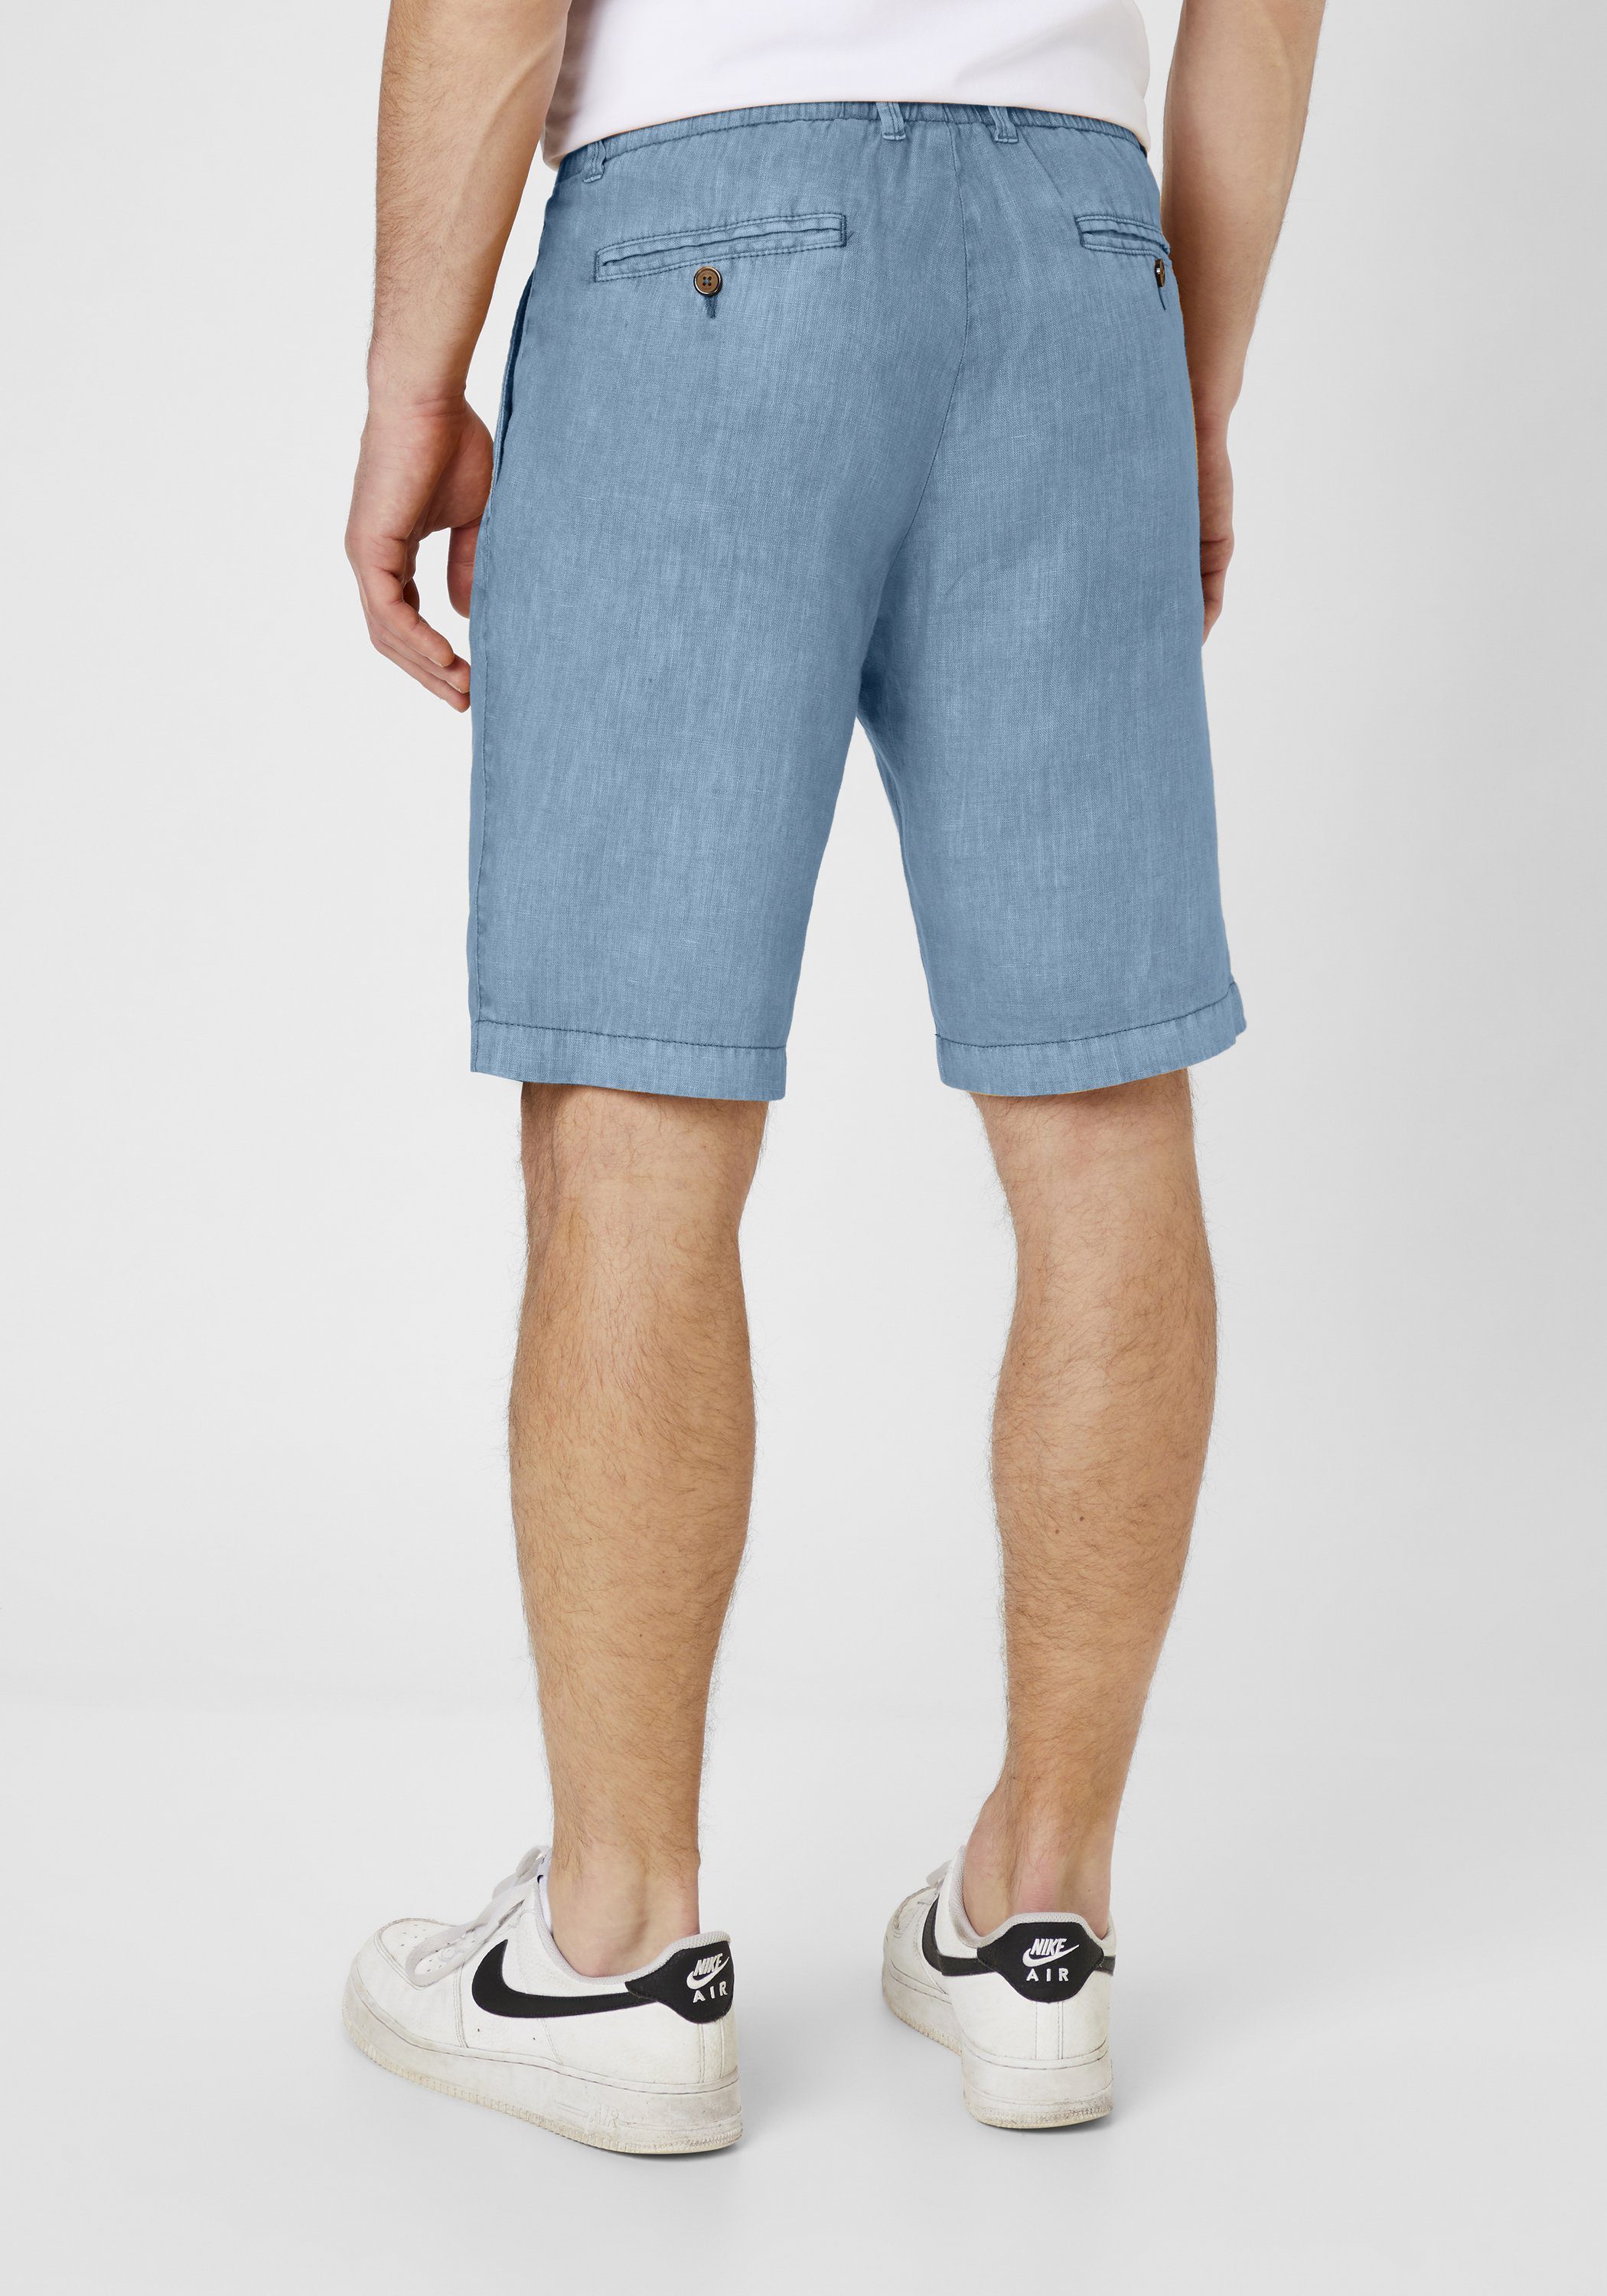 2 S4 Modern MAUI Leinen panoramic Jackets Leichte blue Fit Bermudas Shorts aus